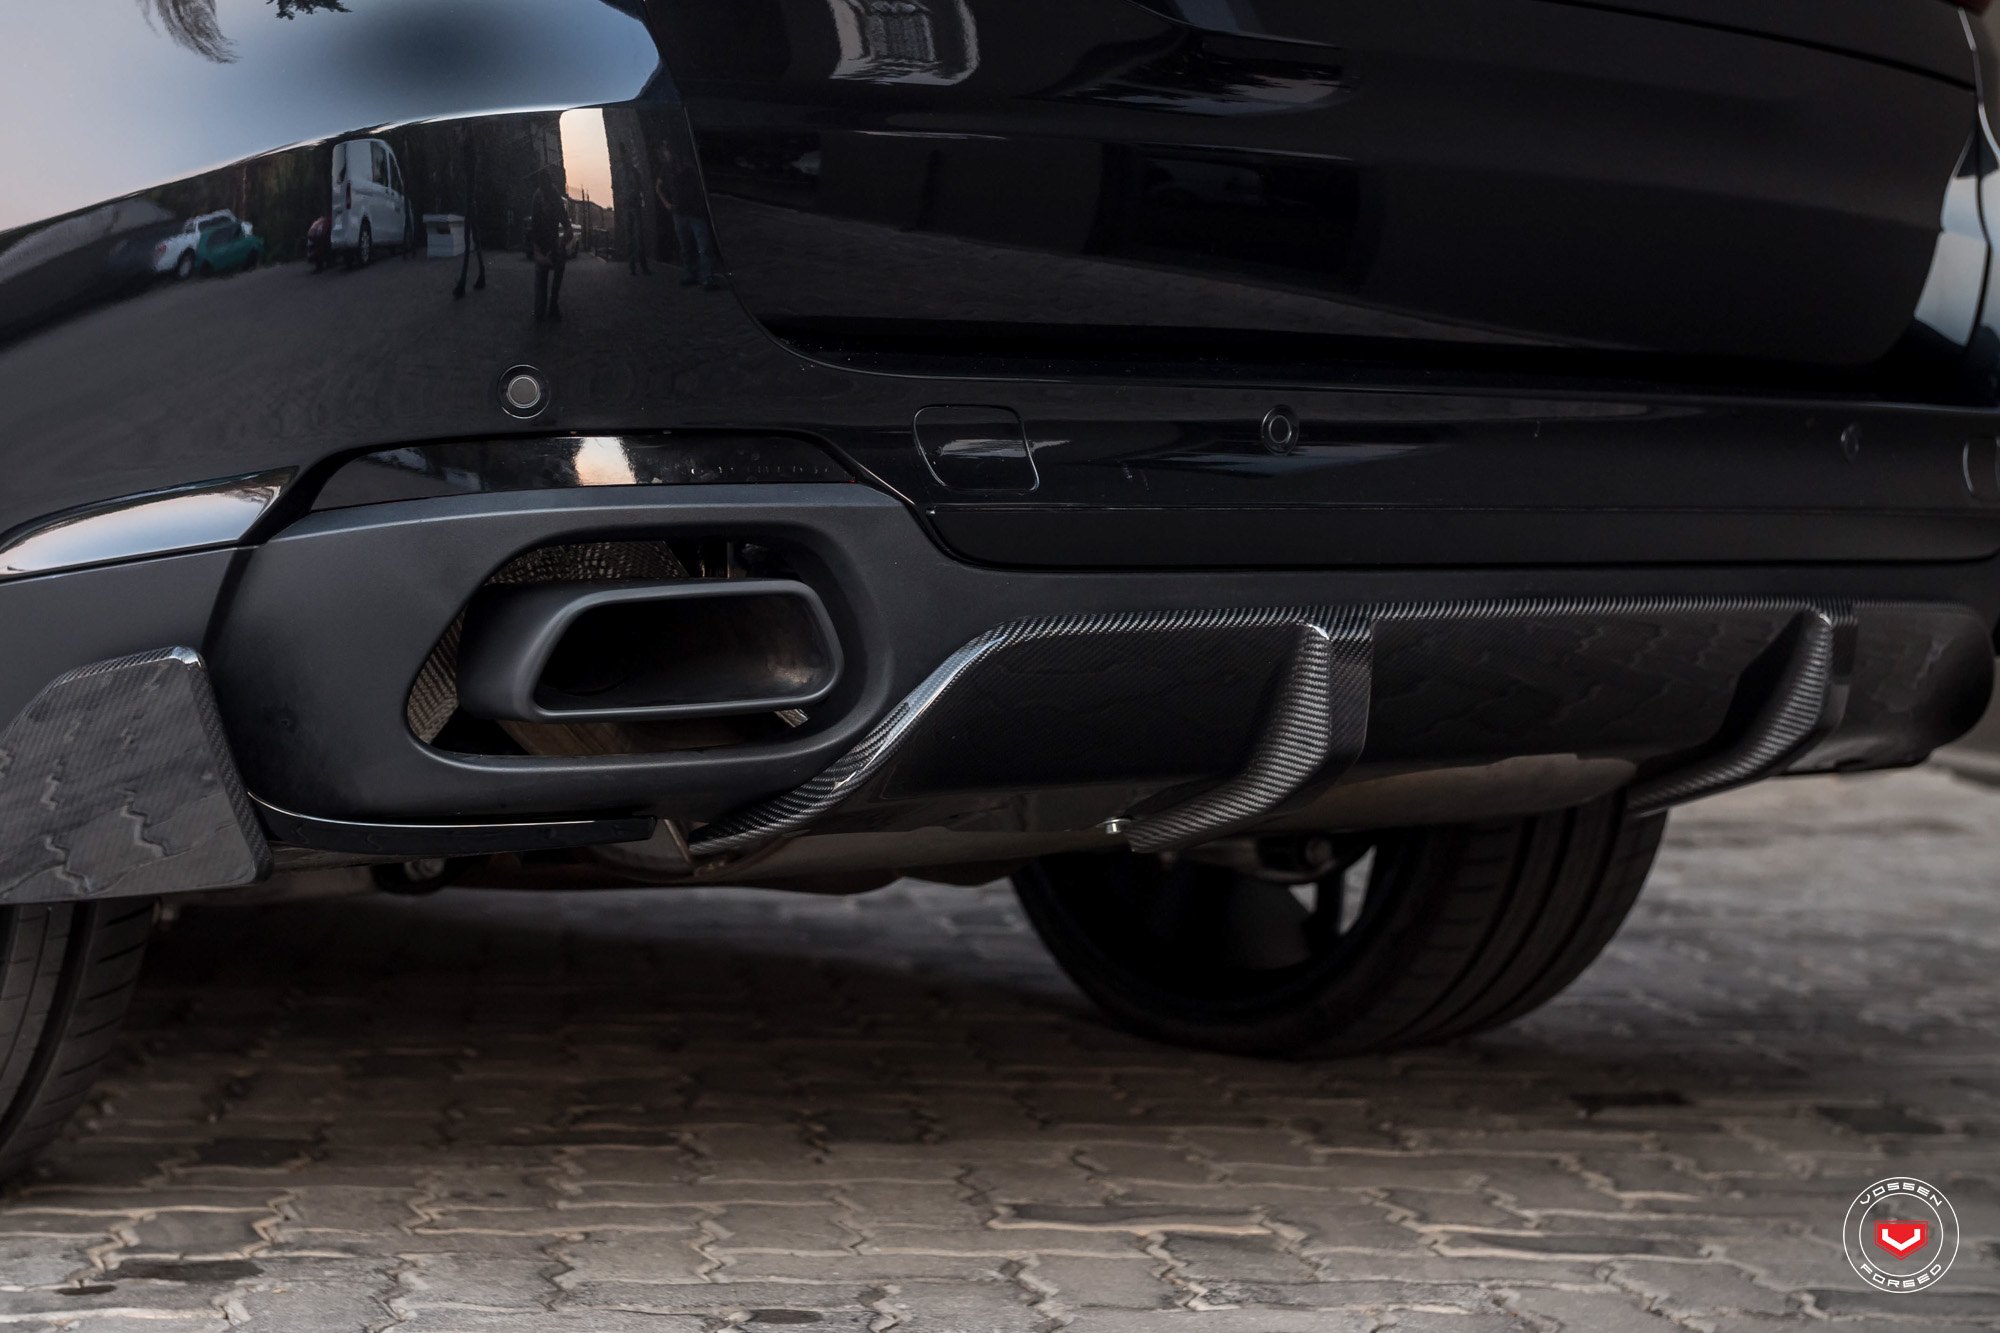 Custom Carbon Fiber Rear Diffuser on BMW X5 - Photo by Vossen